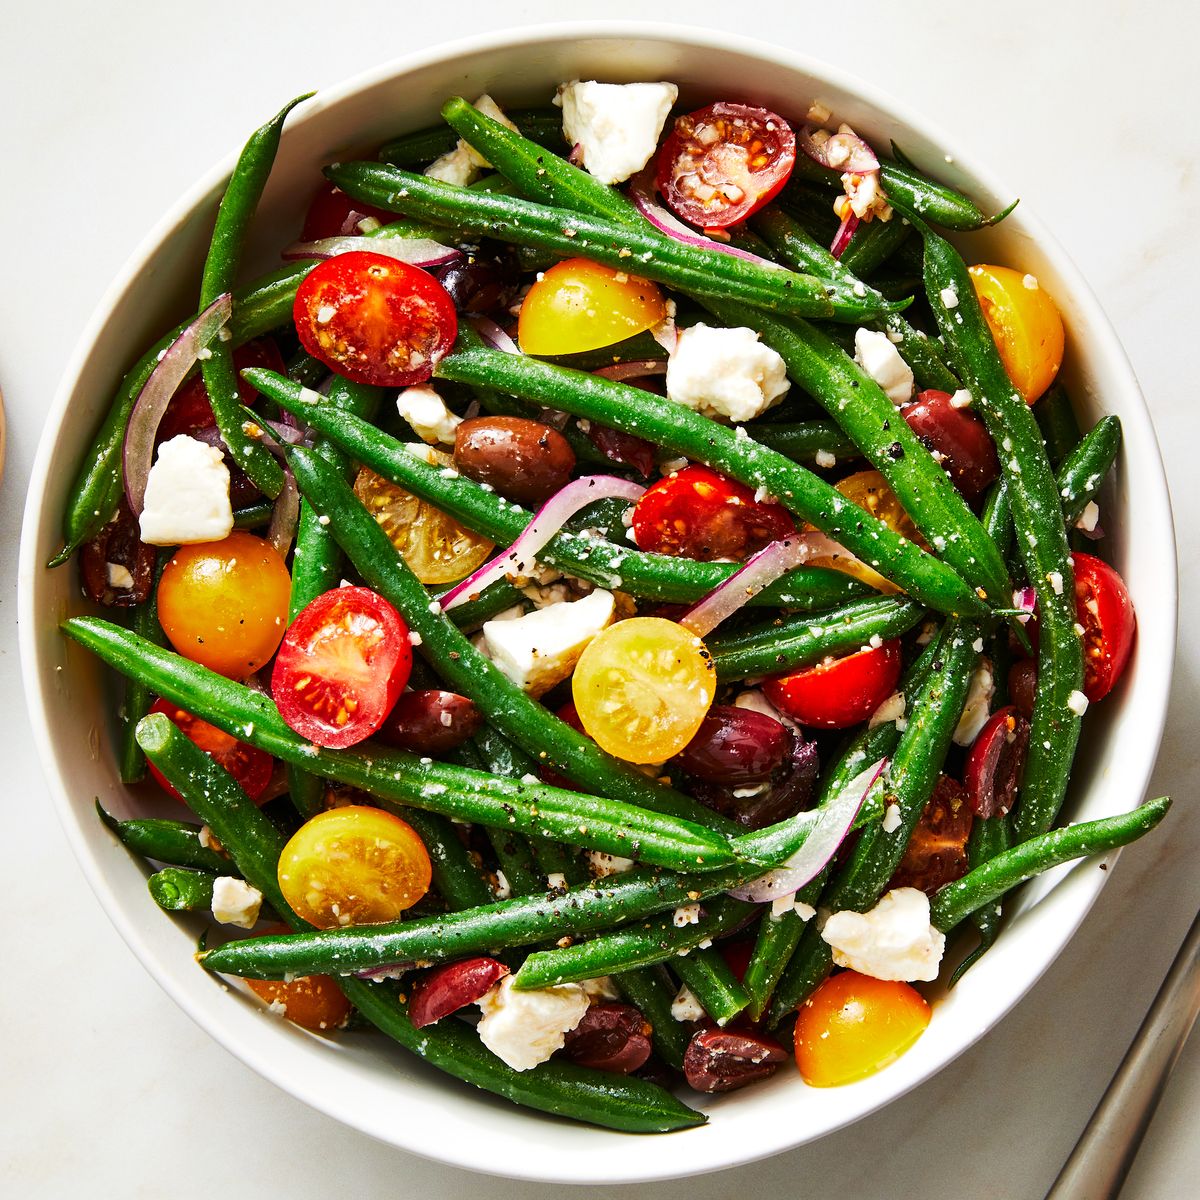 Best Green Bean Salad Recipe - How To Make Green Bean Salad